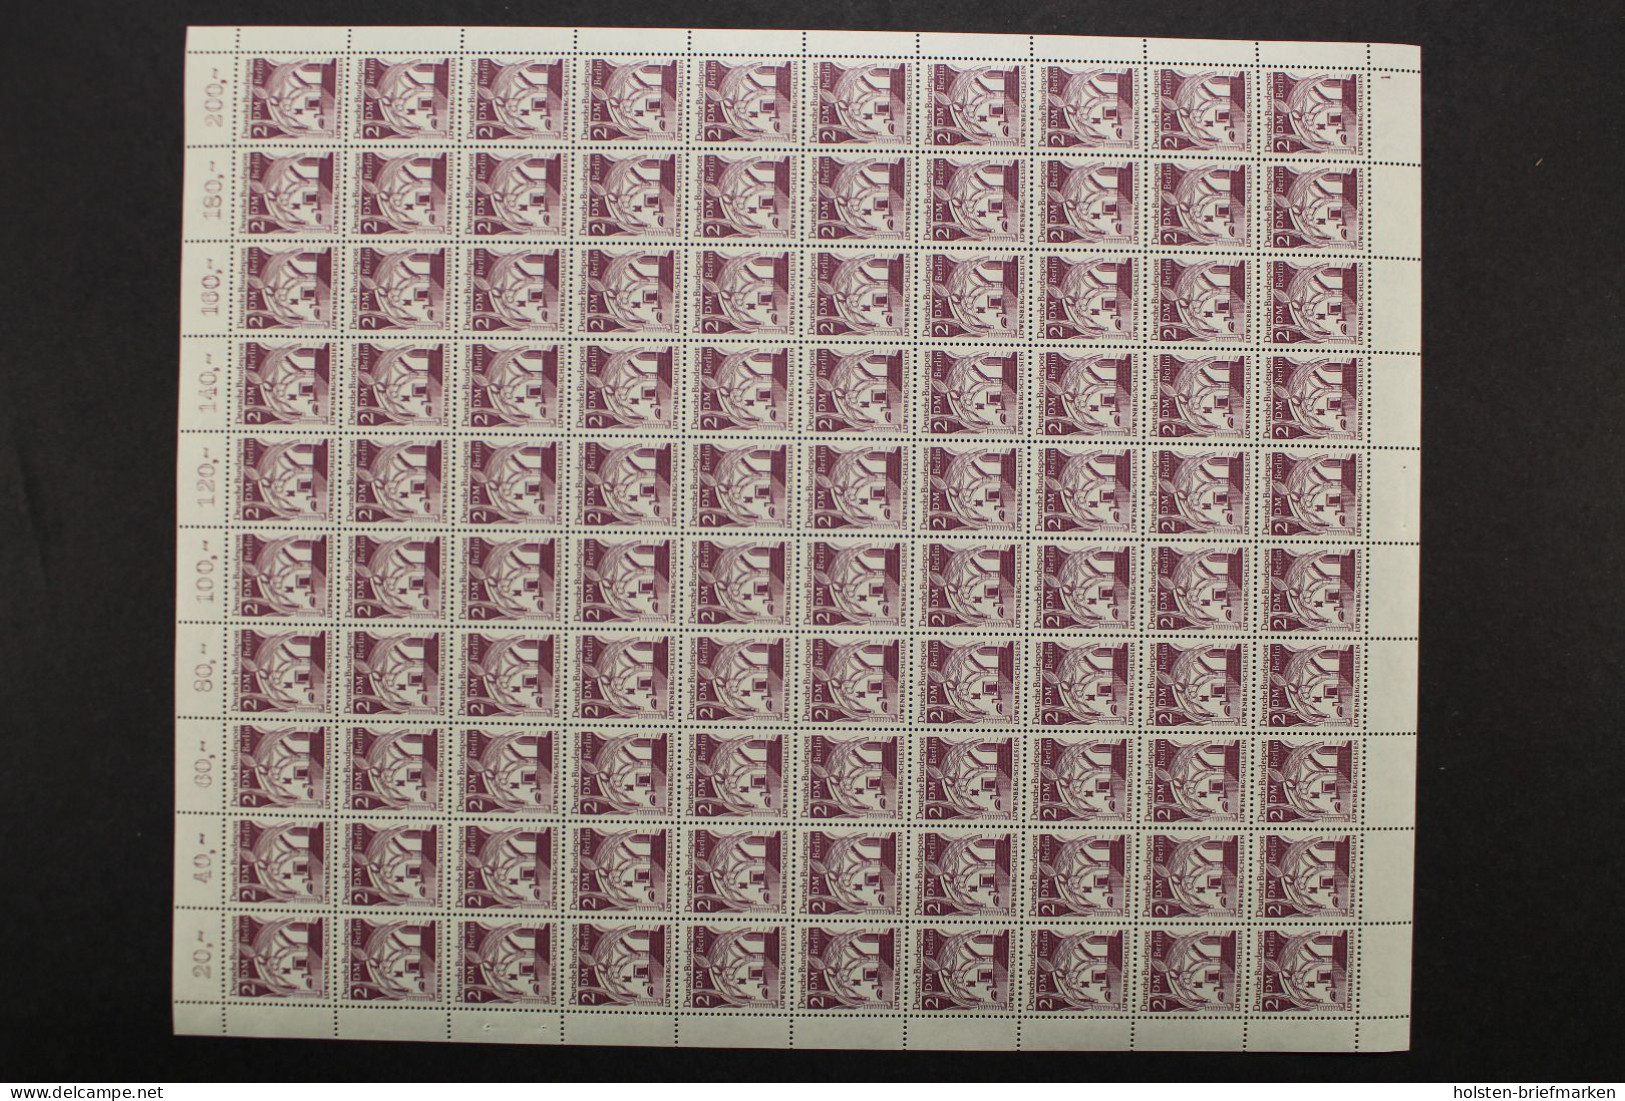 Berlin, MiNr. 270-285, 100er Bogensatz, postfrisch